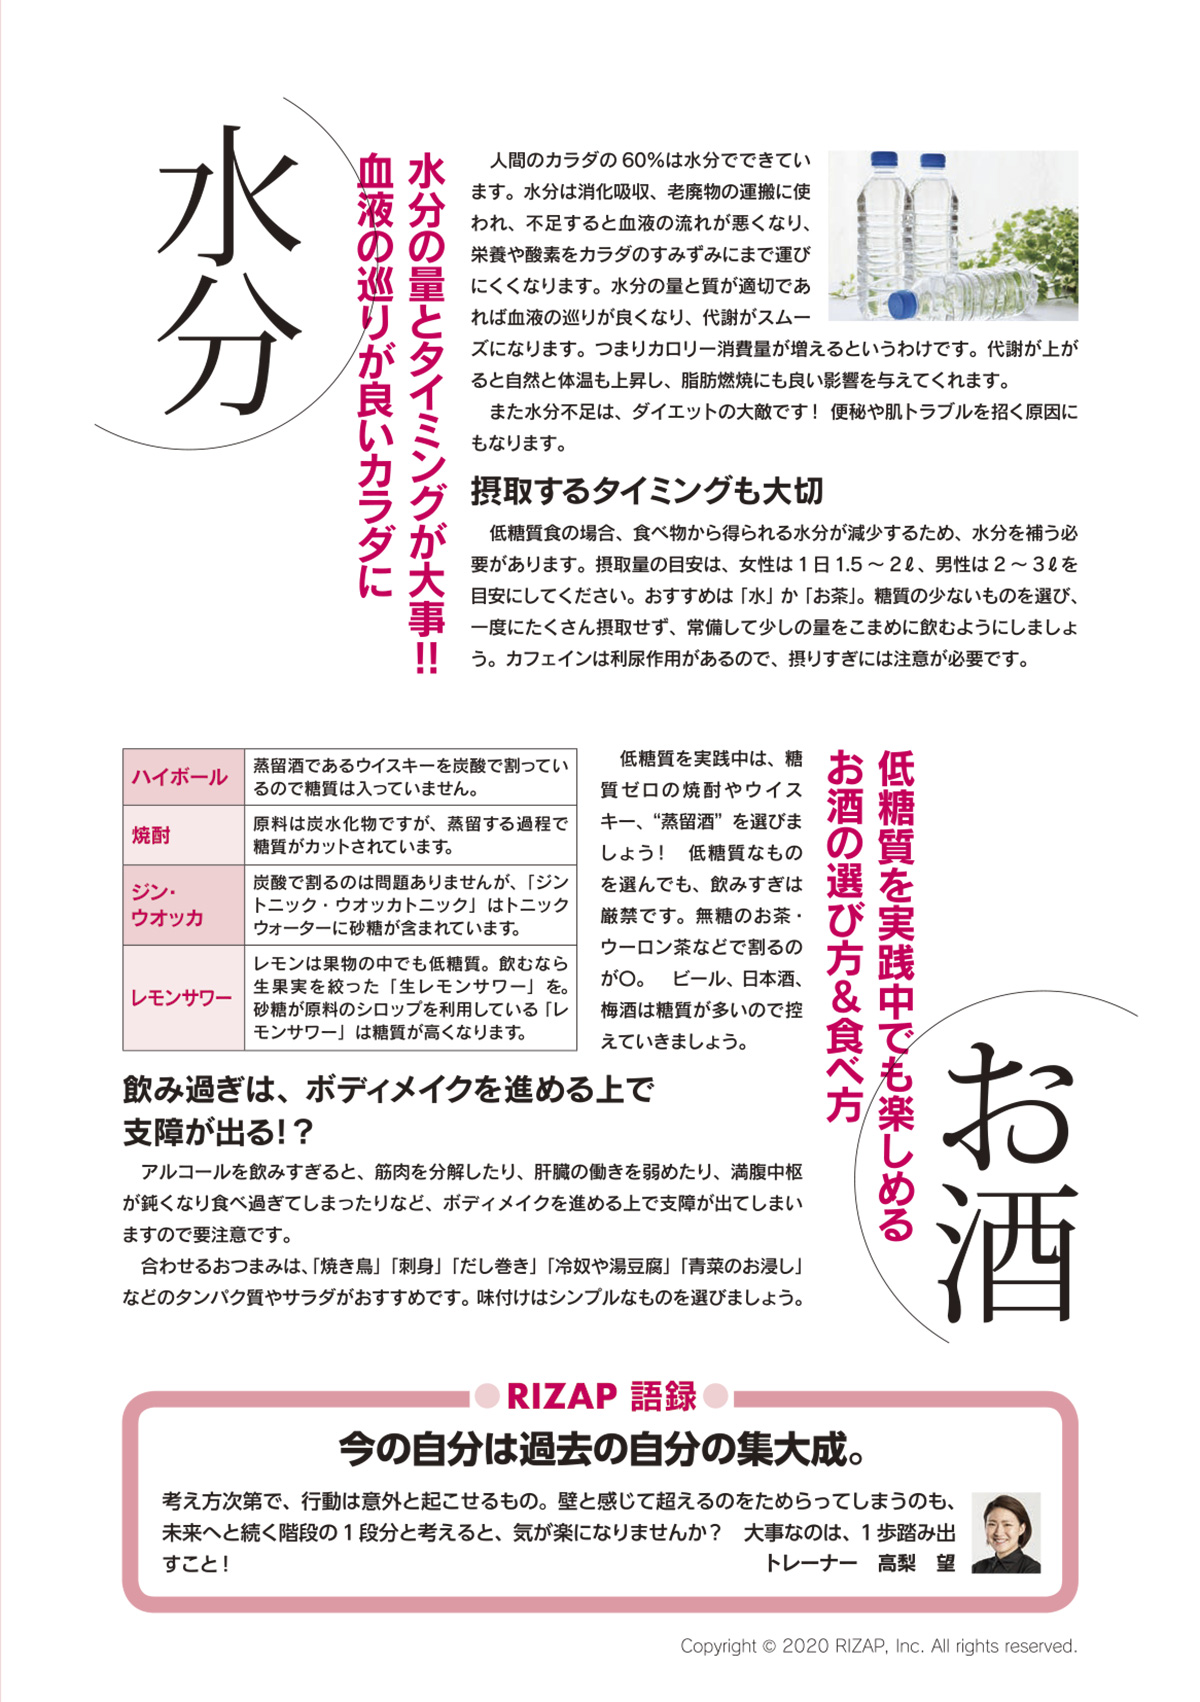 Rizapコラム 動画 水分 お酒とカラダの関係 を掲載しました 神建連国保 神奈川県建設連合国民健康保険組合